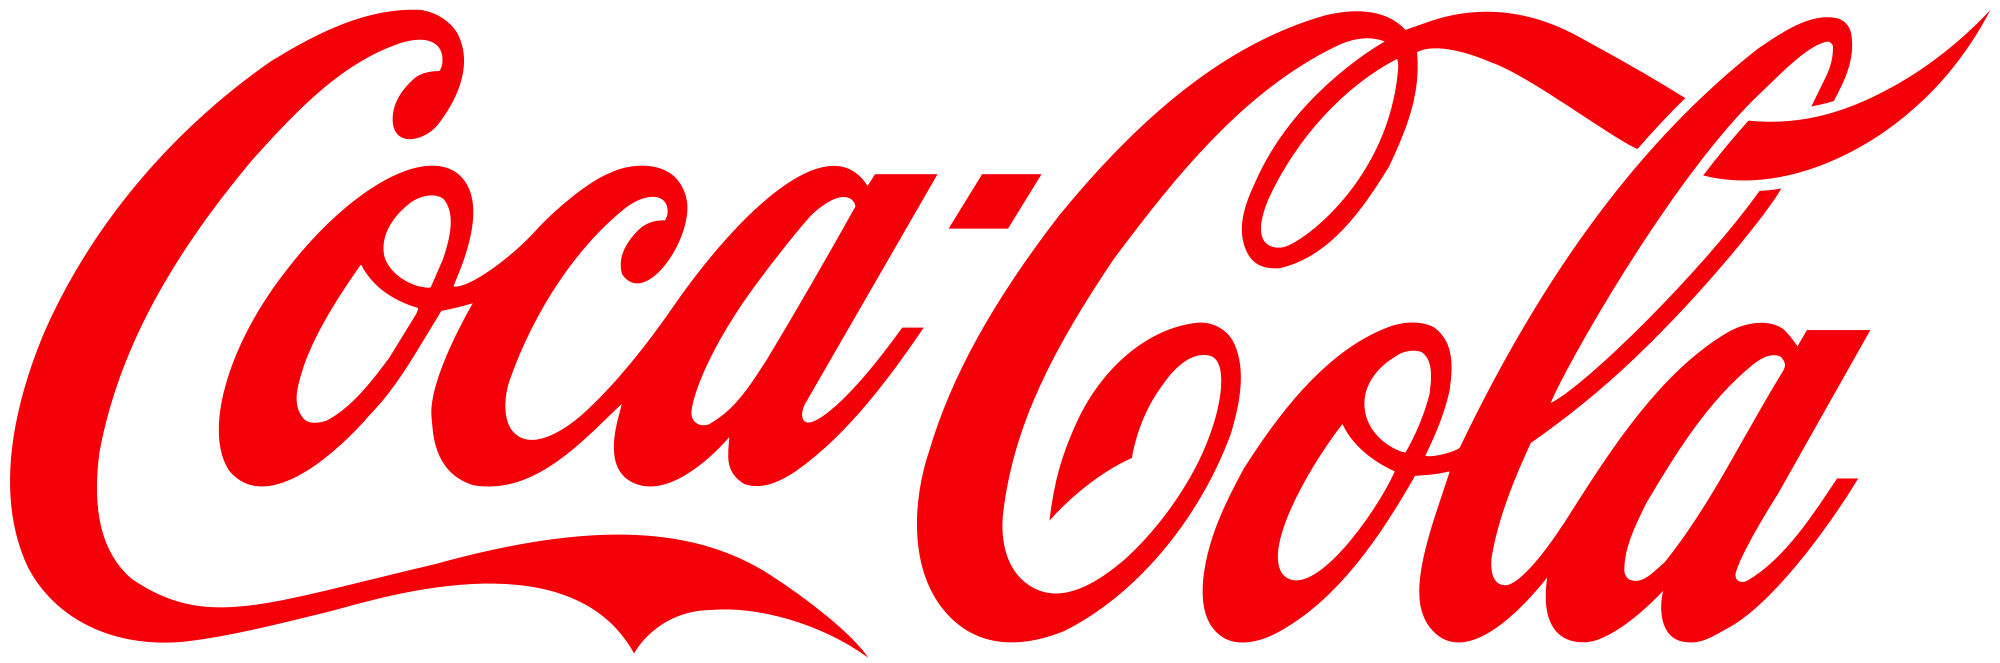 2000px-Coca-Cola_logo.svg